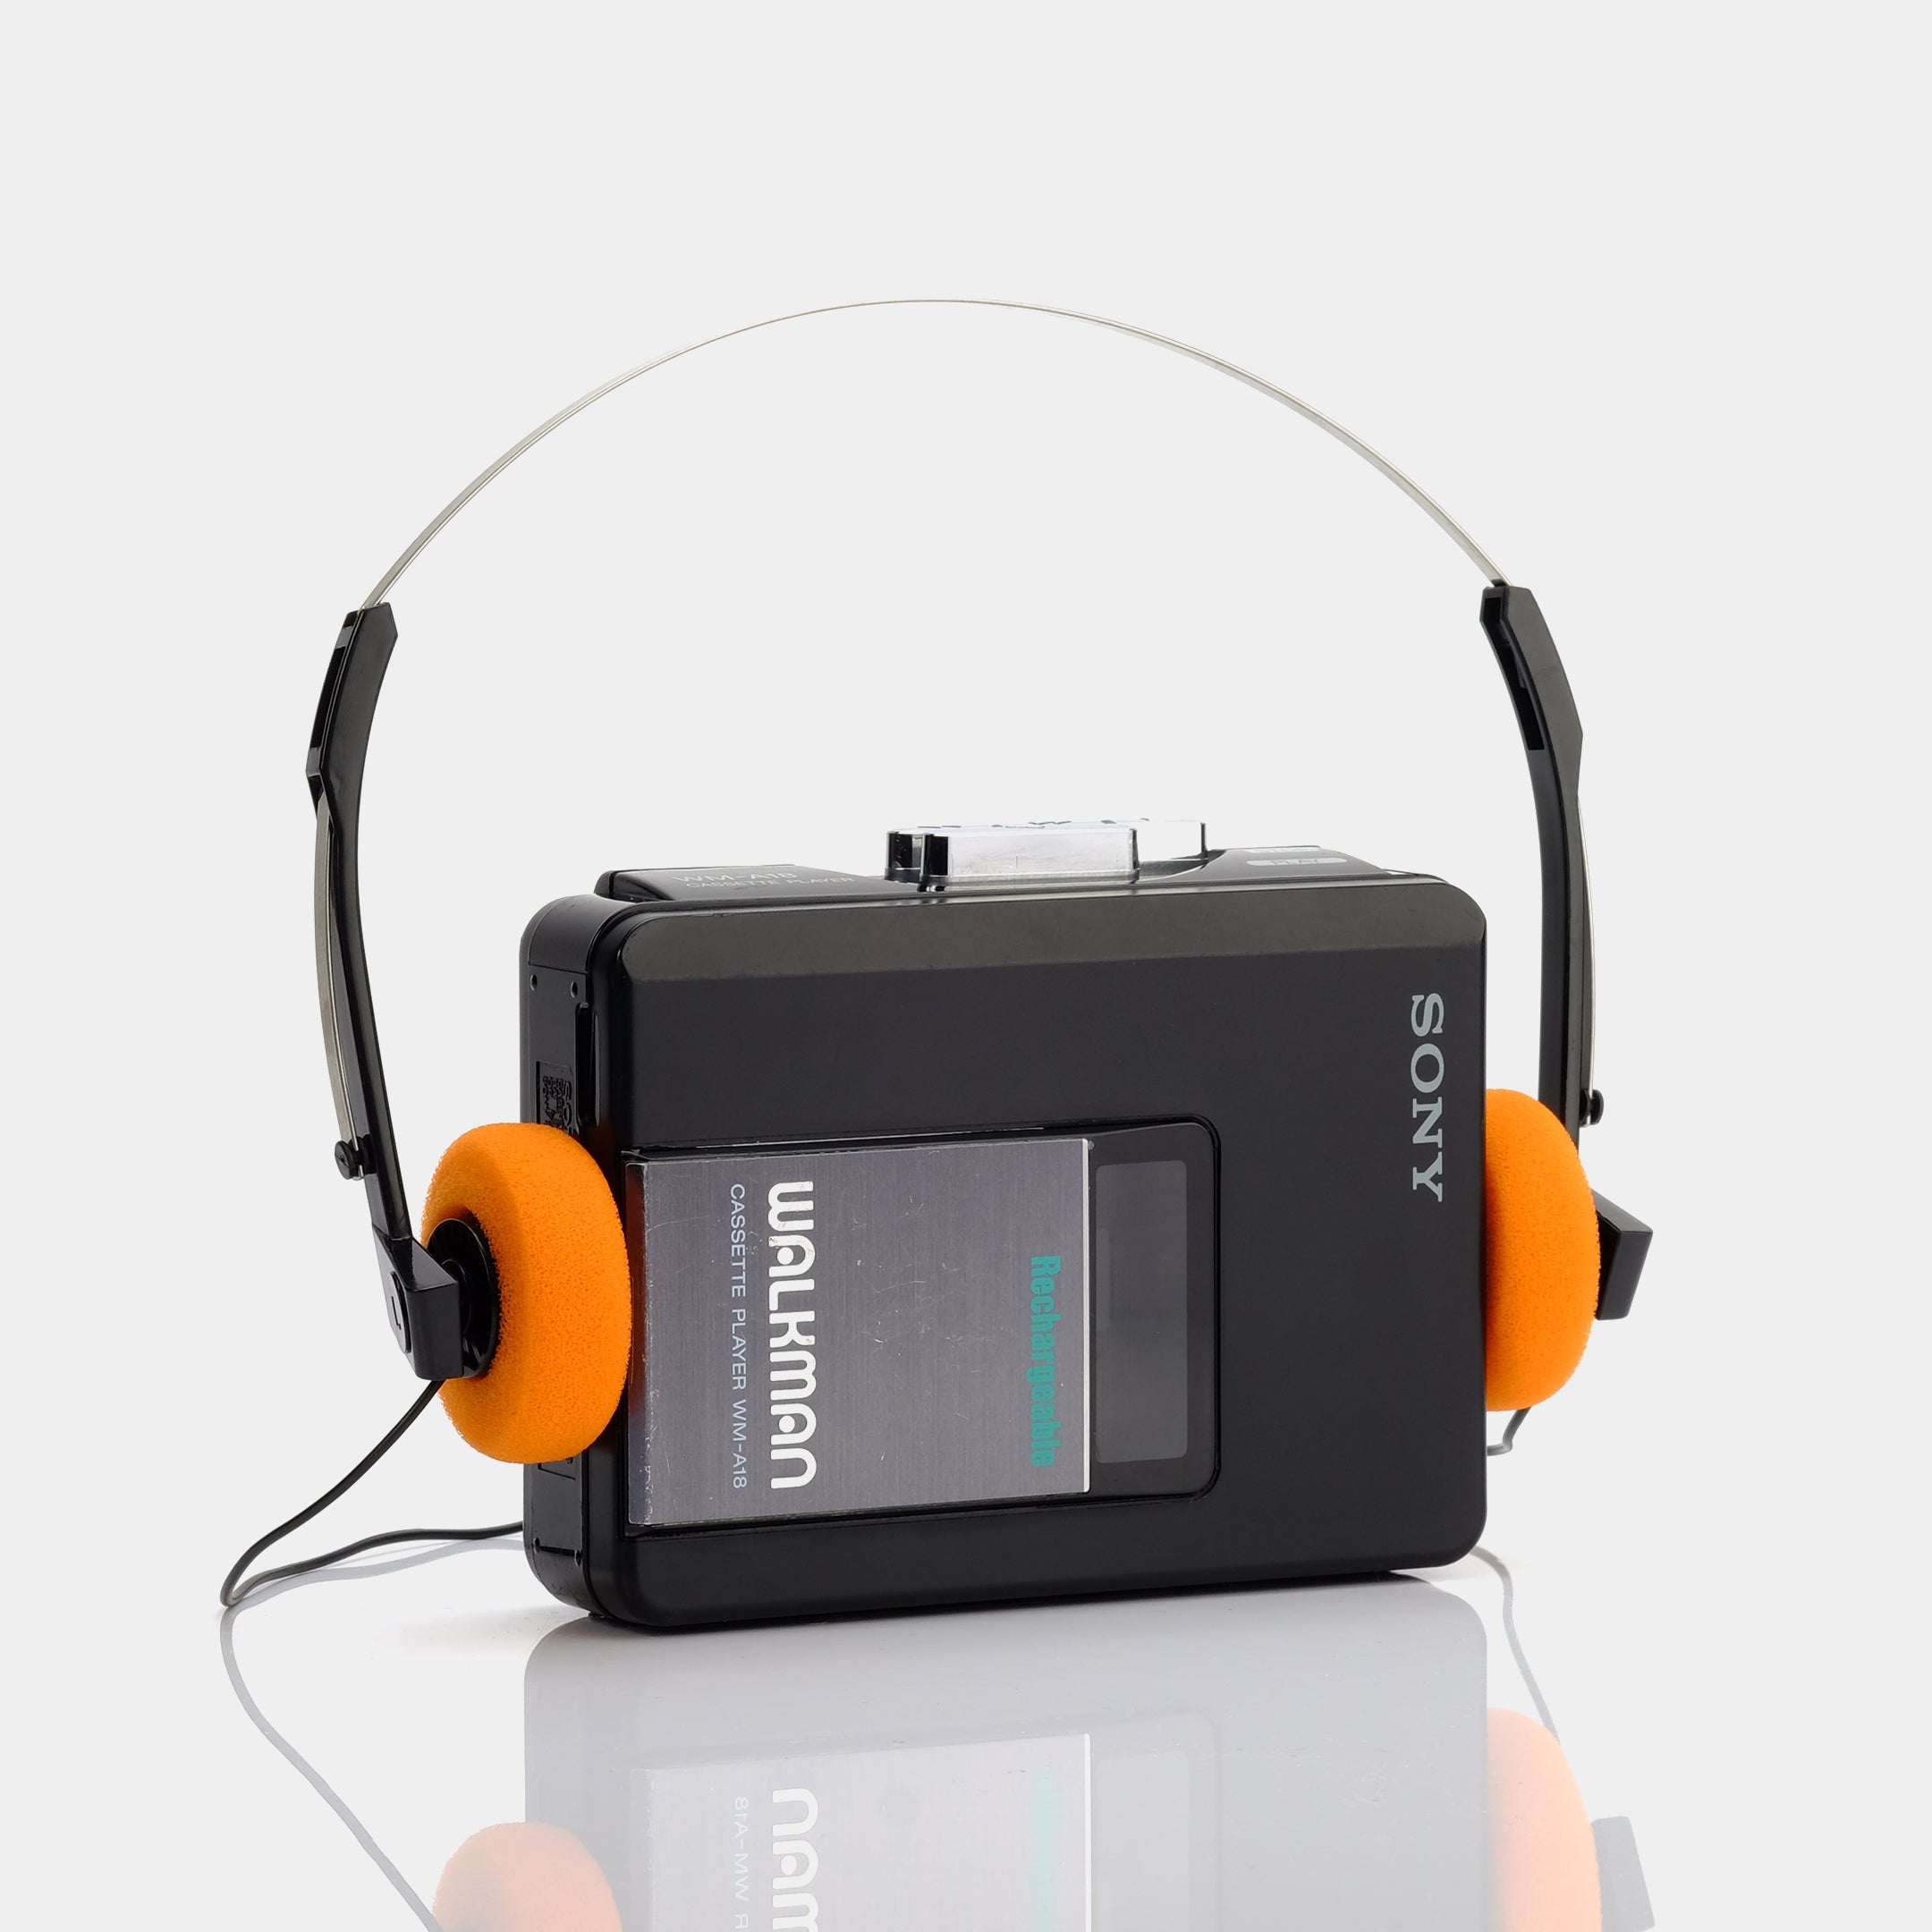 Sony Walkman WM-A18 Portable Cassette Player